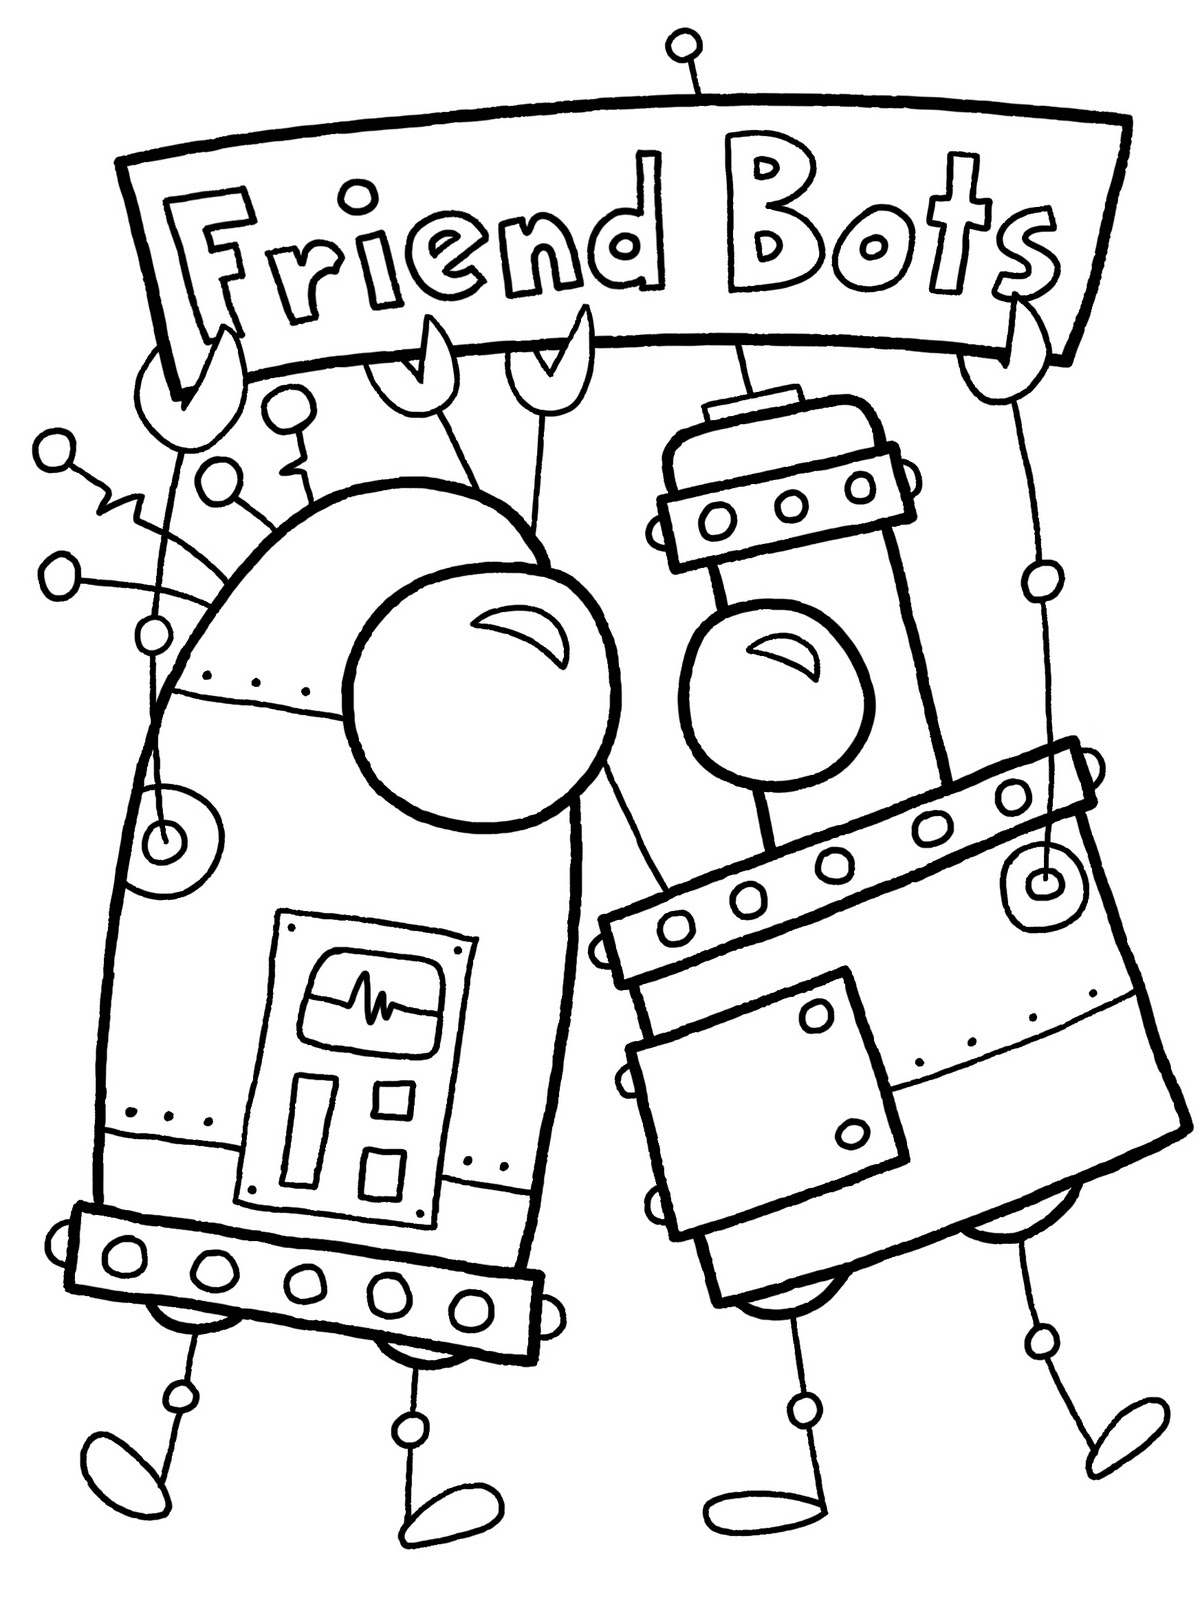  Друзья роботы